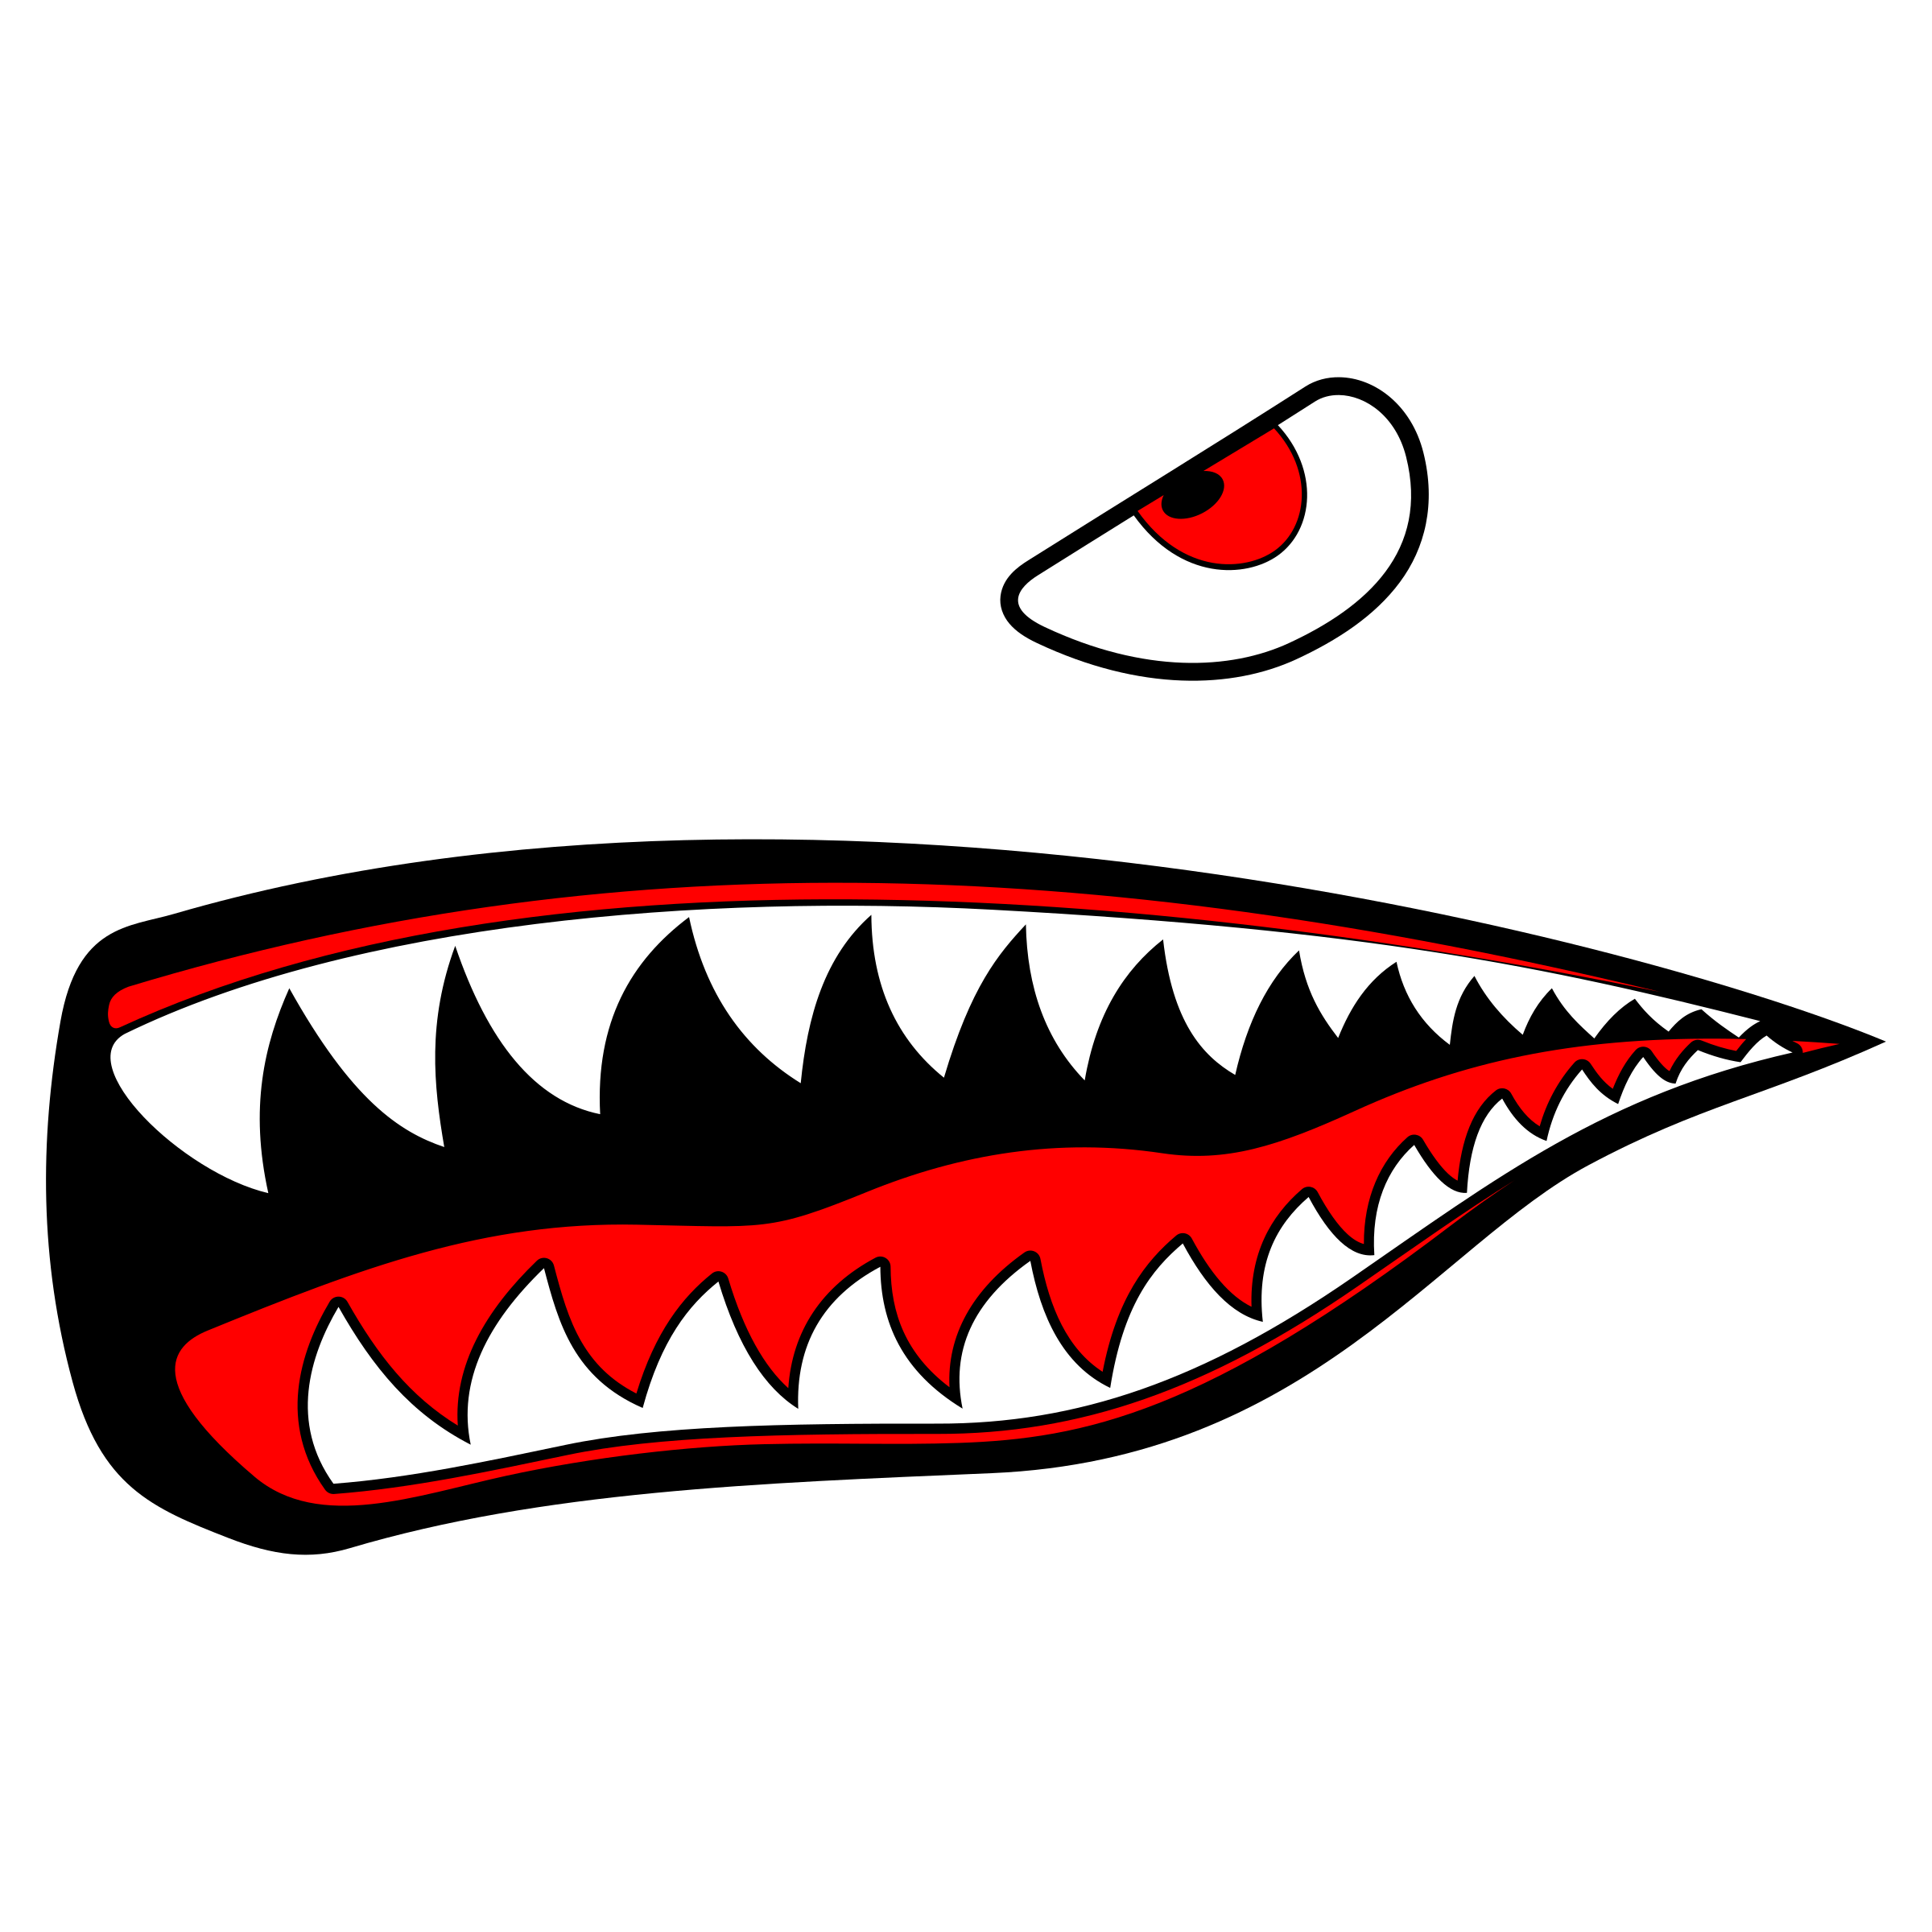 Shark Eye and teeth vector clipart image - Free stock ...